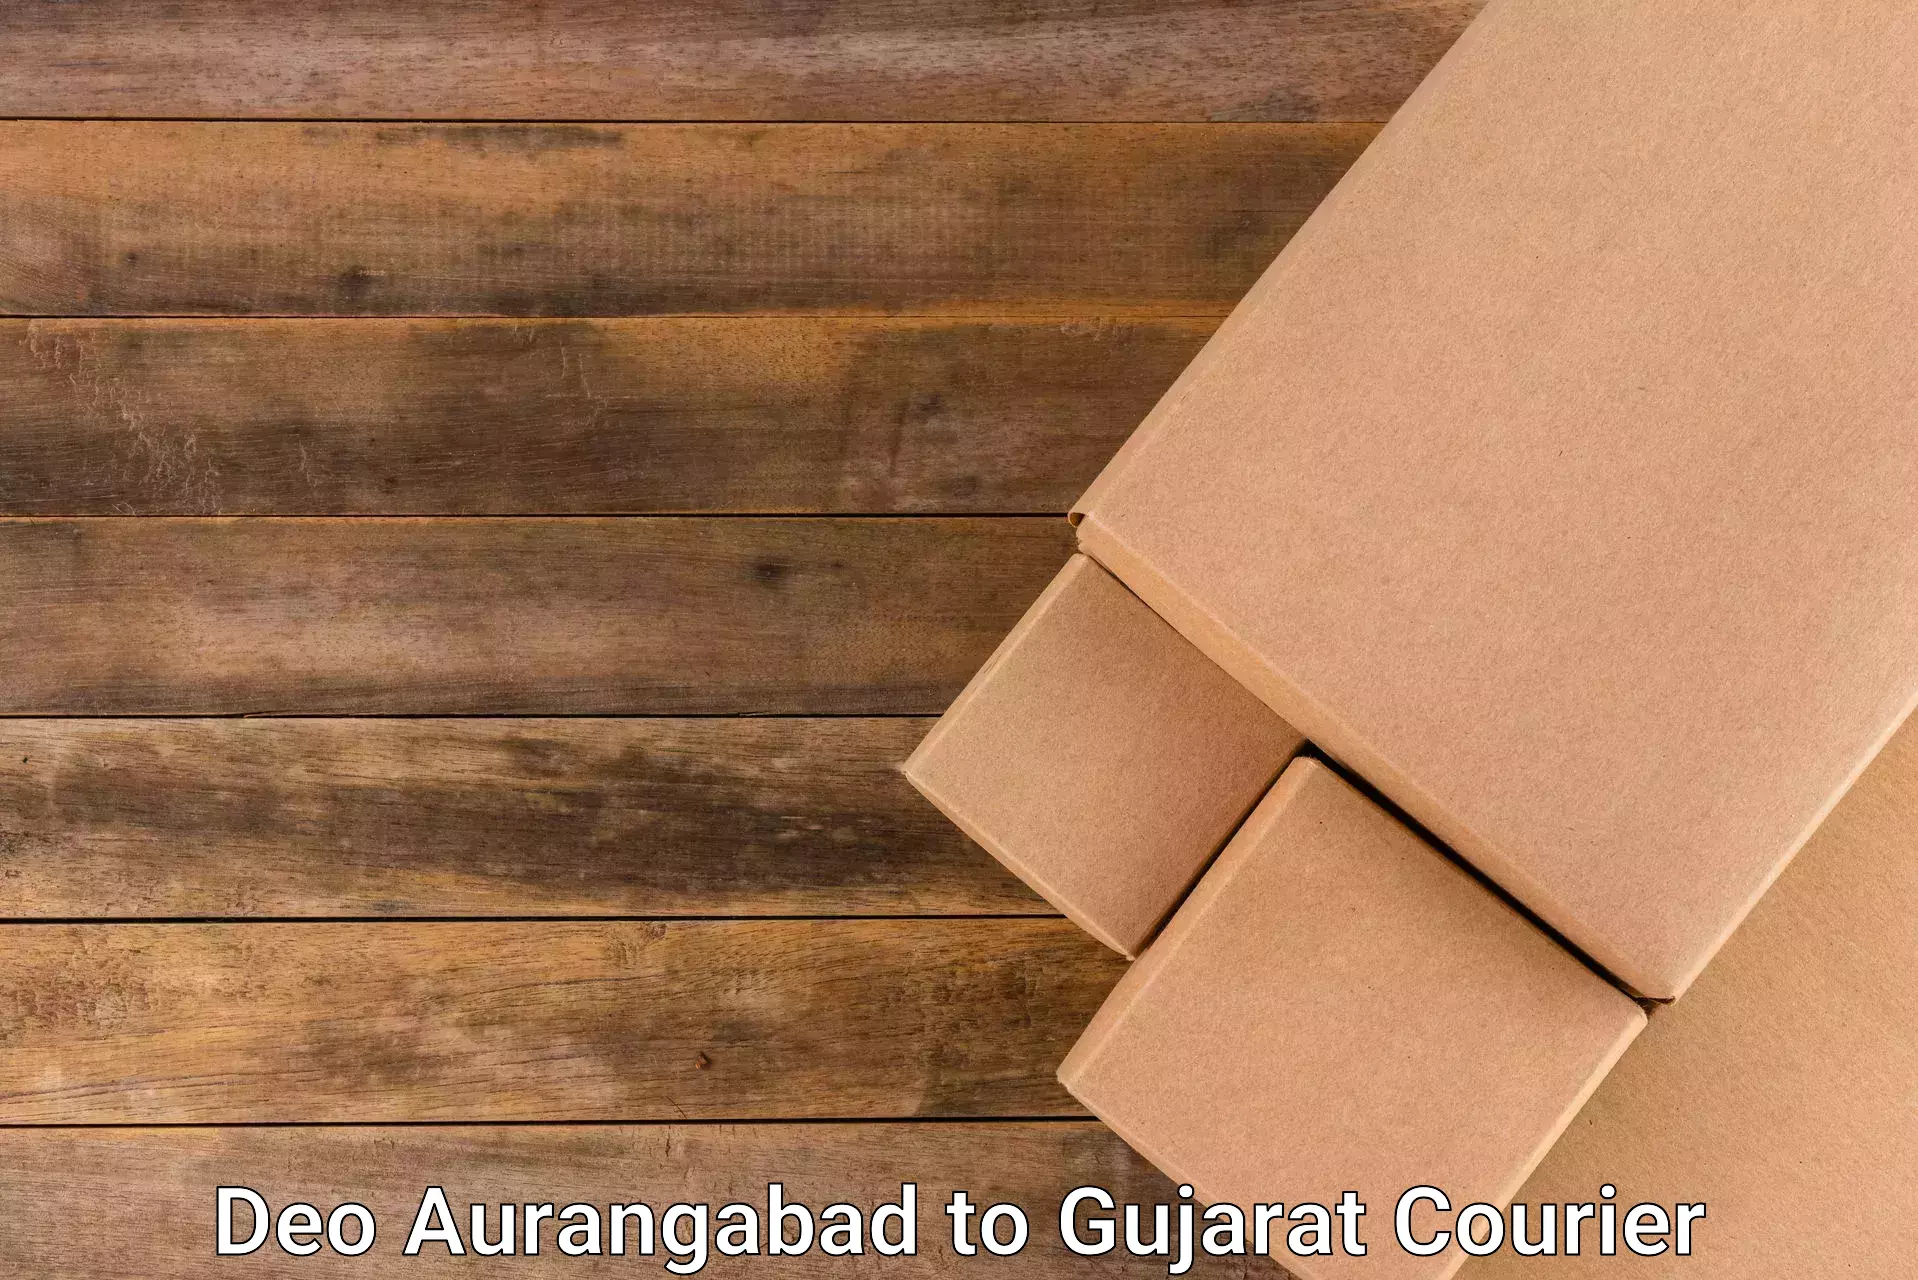 Nationwide parcel services Deo Aurangabad to Anjar